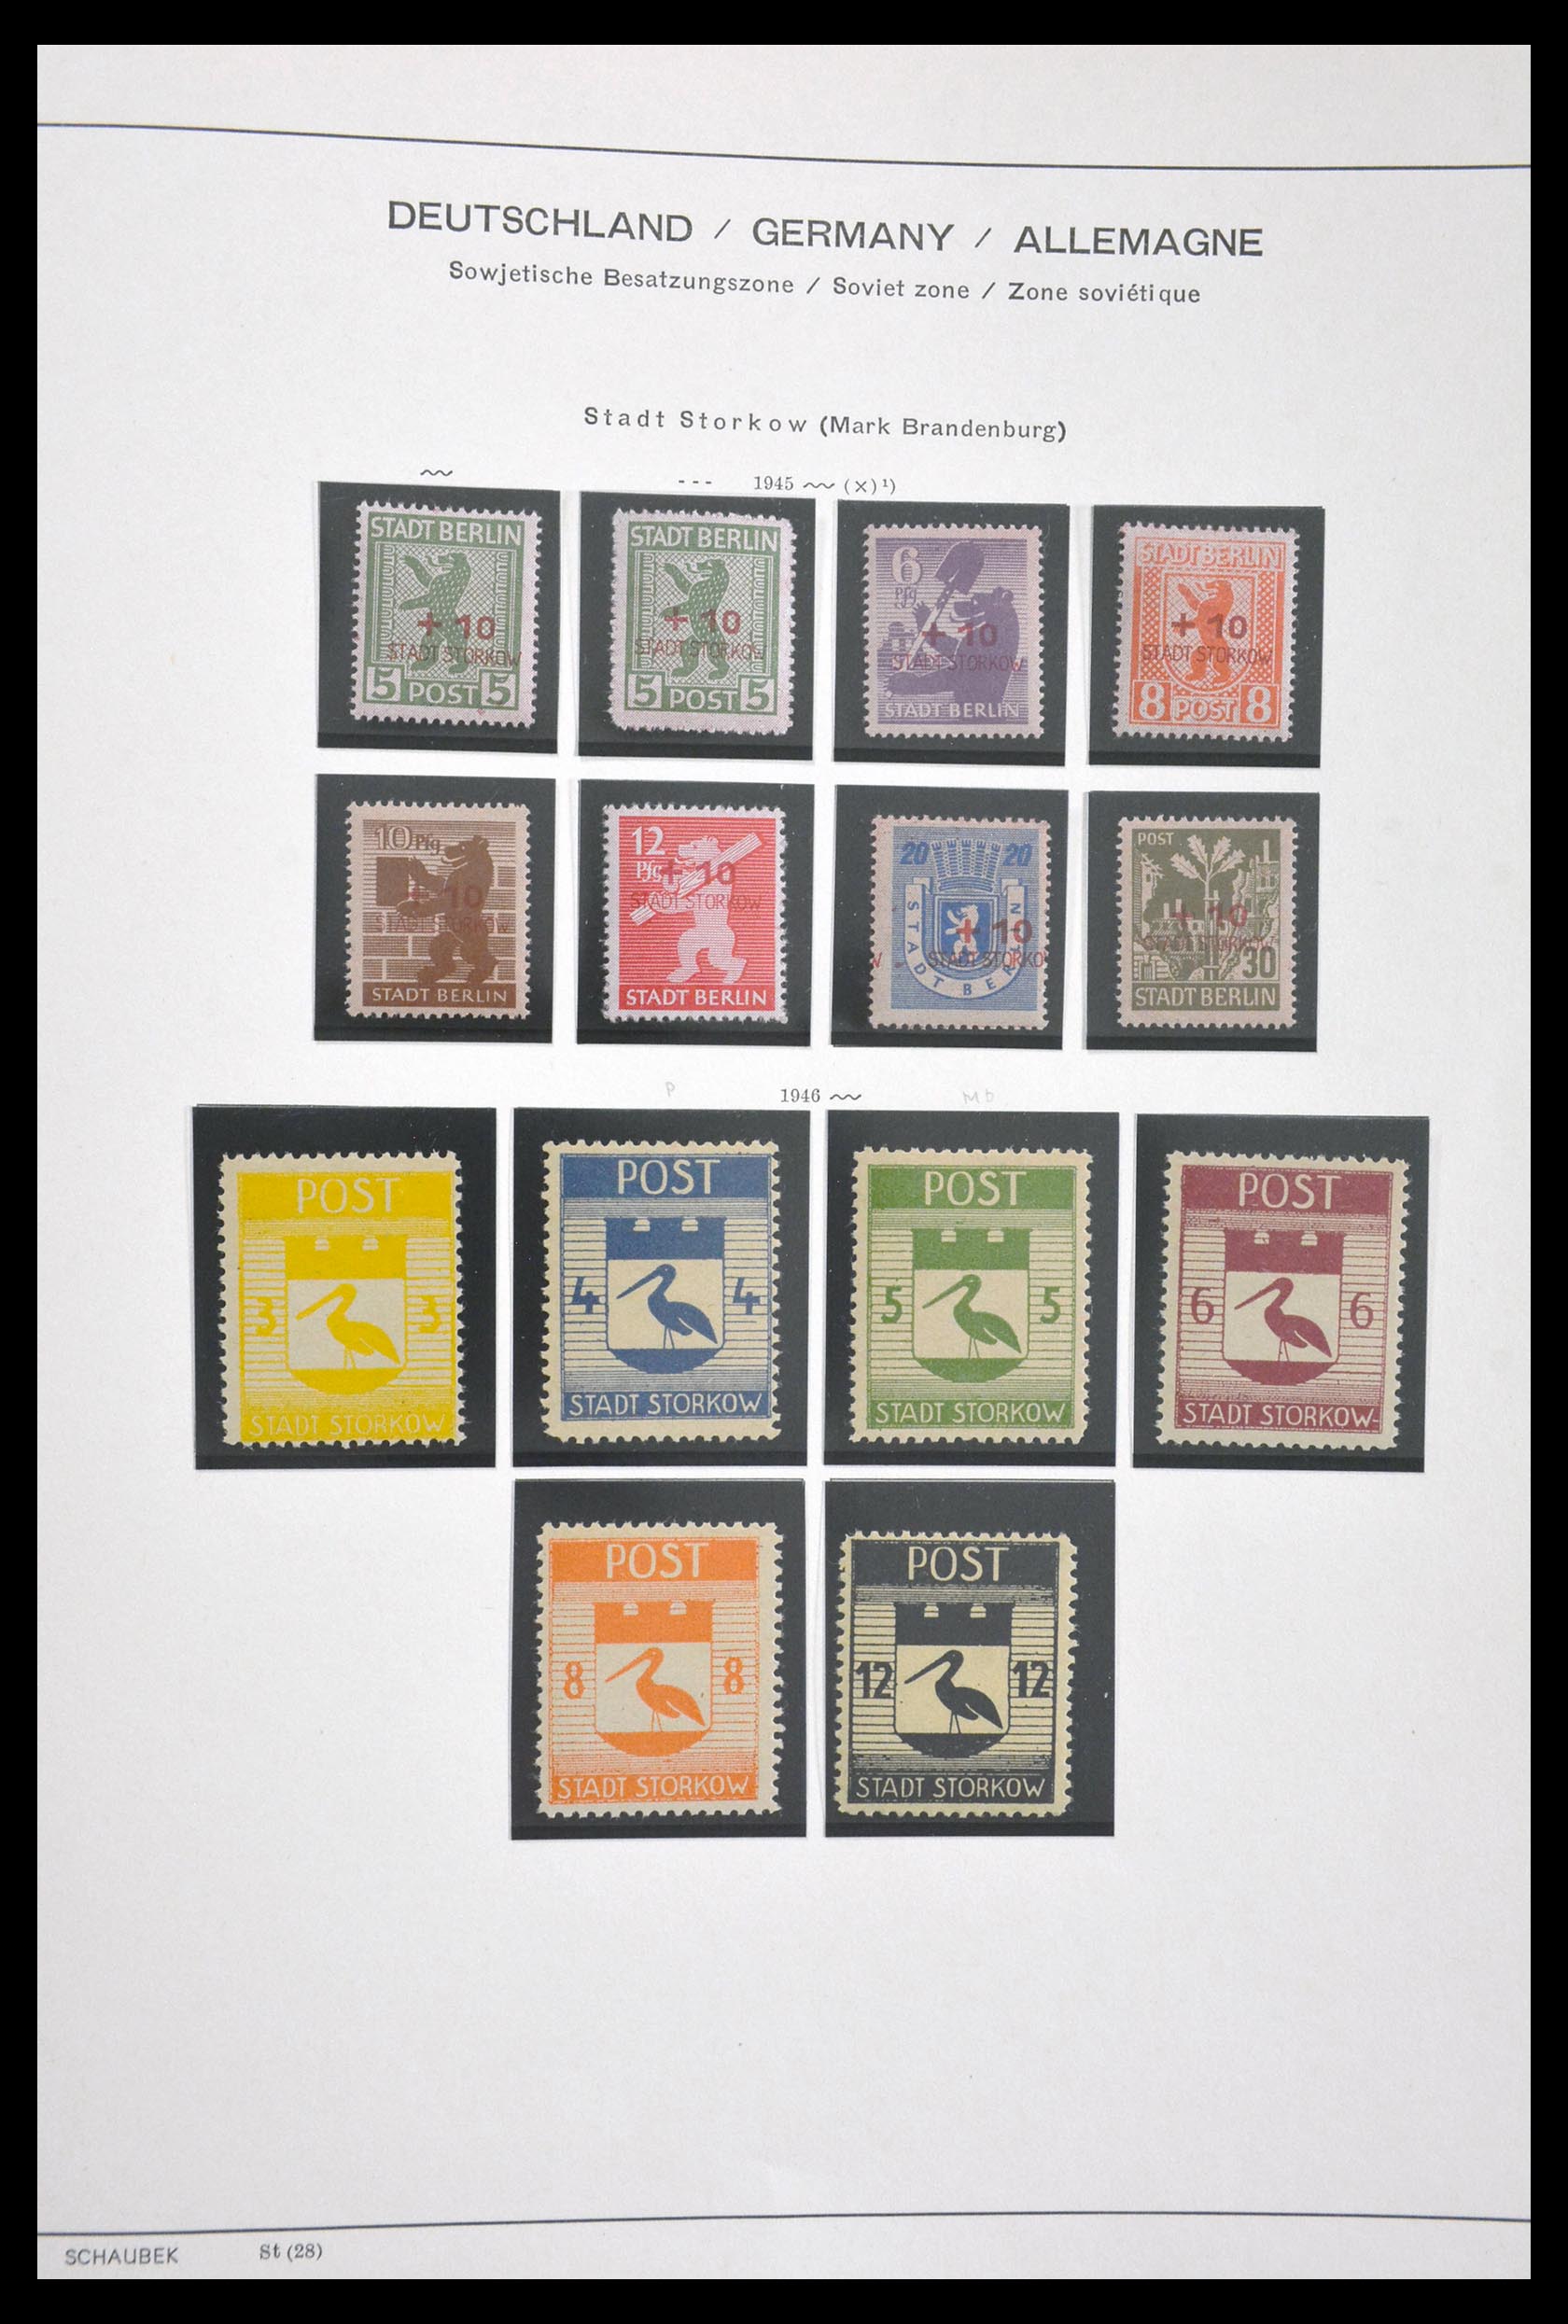 29731 049 - 29731 Local stamps Sovjetzone 1945-1949.